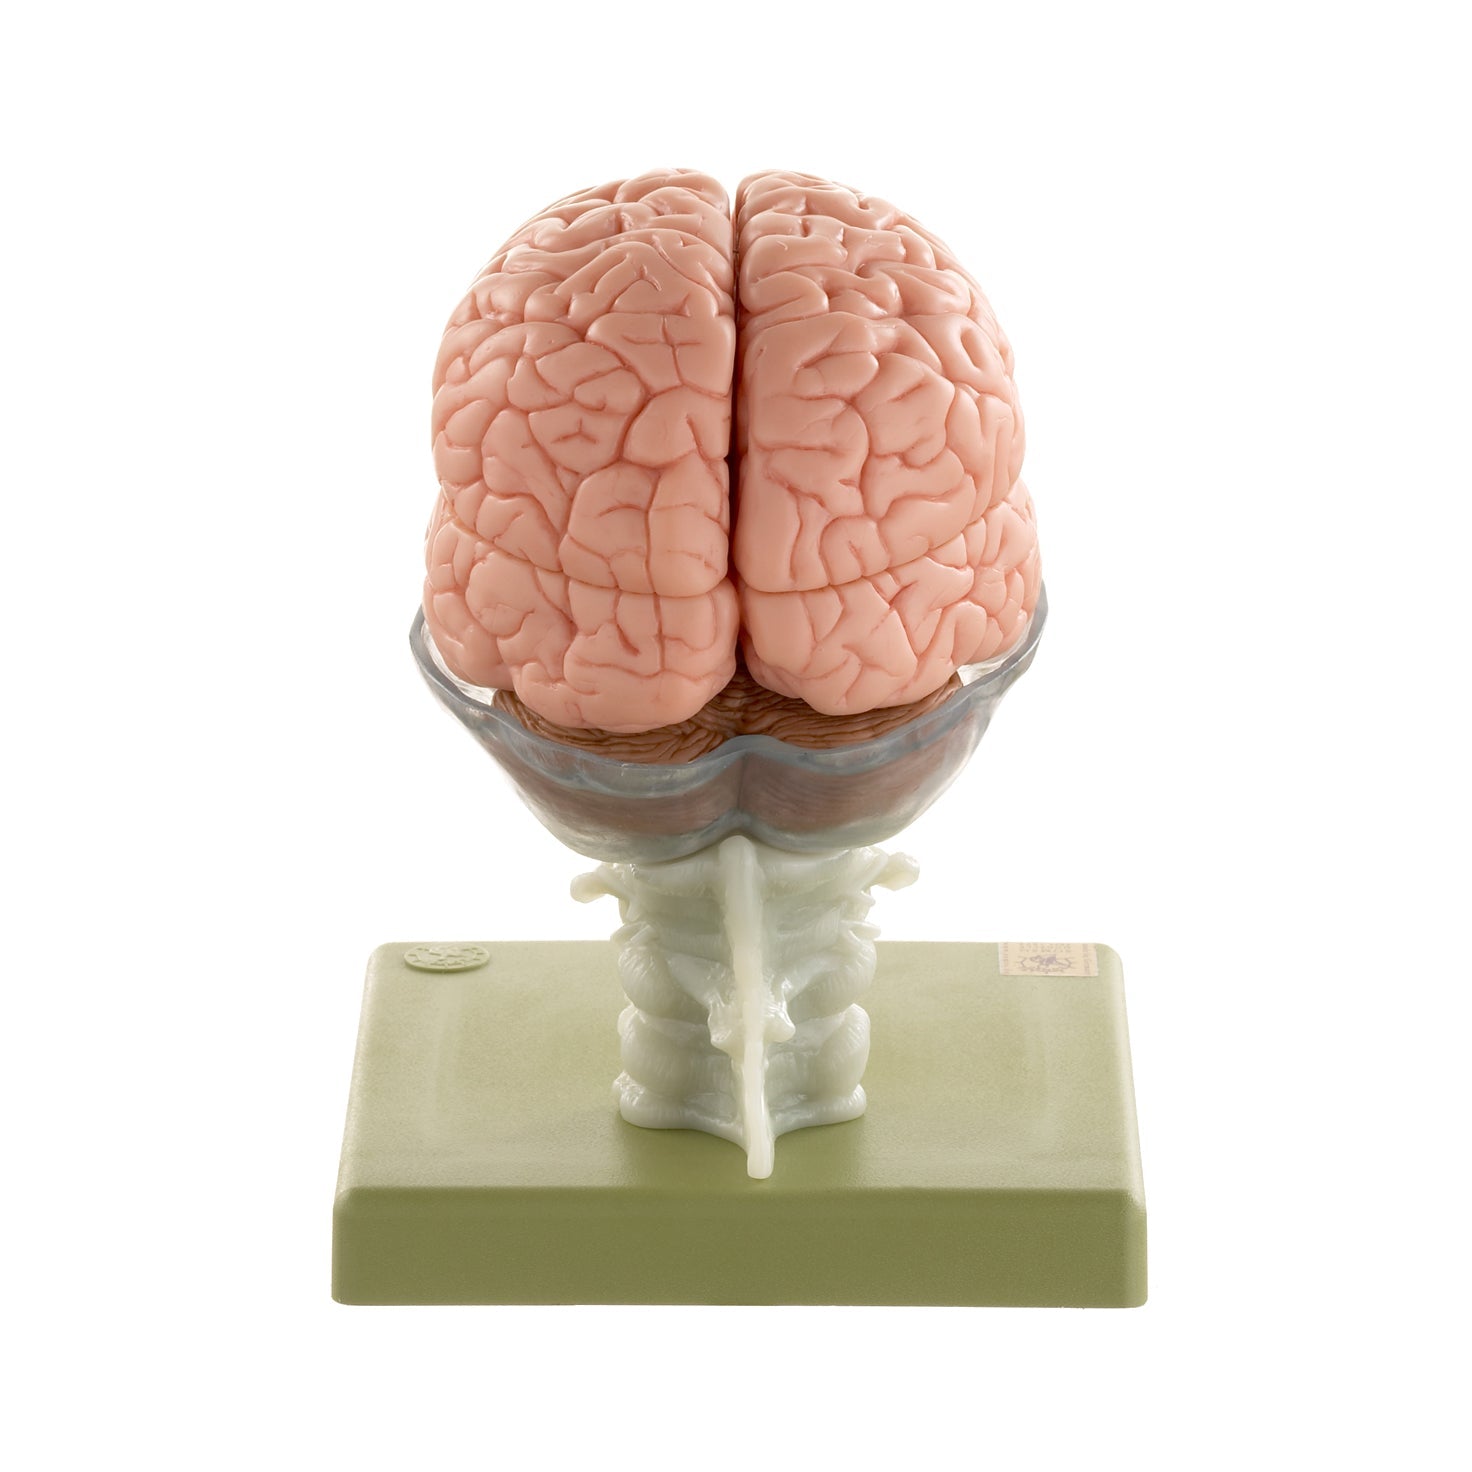 SOMSO Model of the Human Brain | SOMSO Human Brain Model 